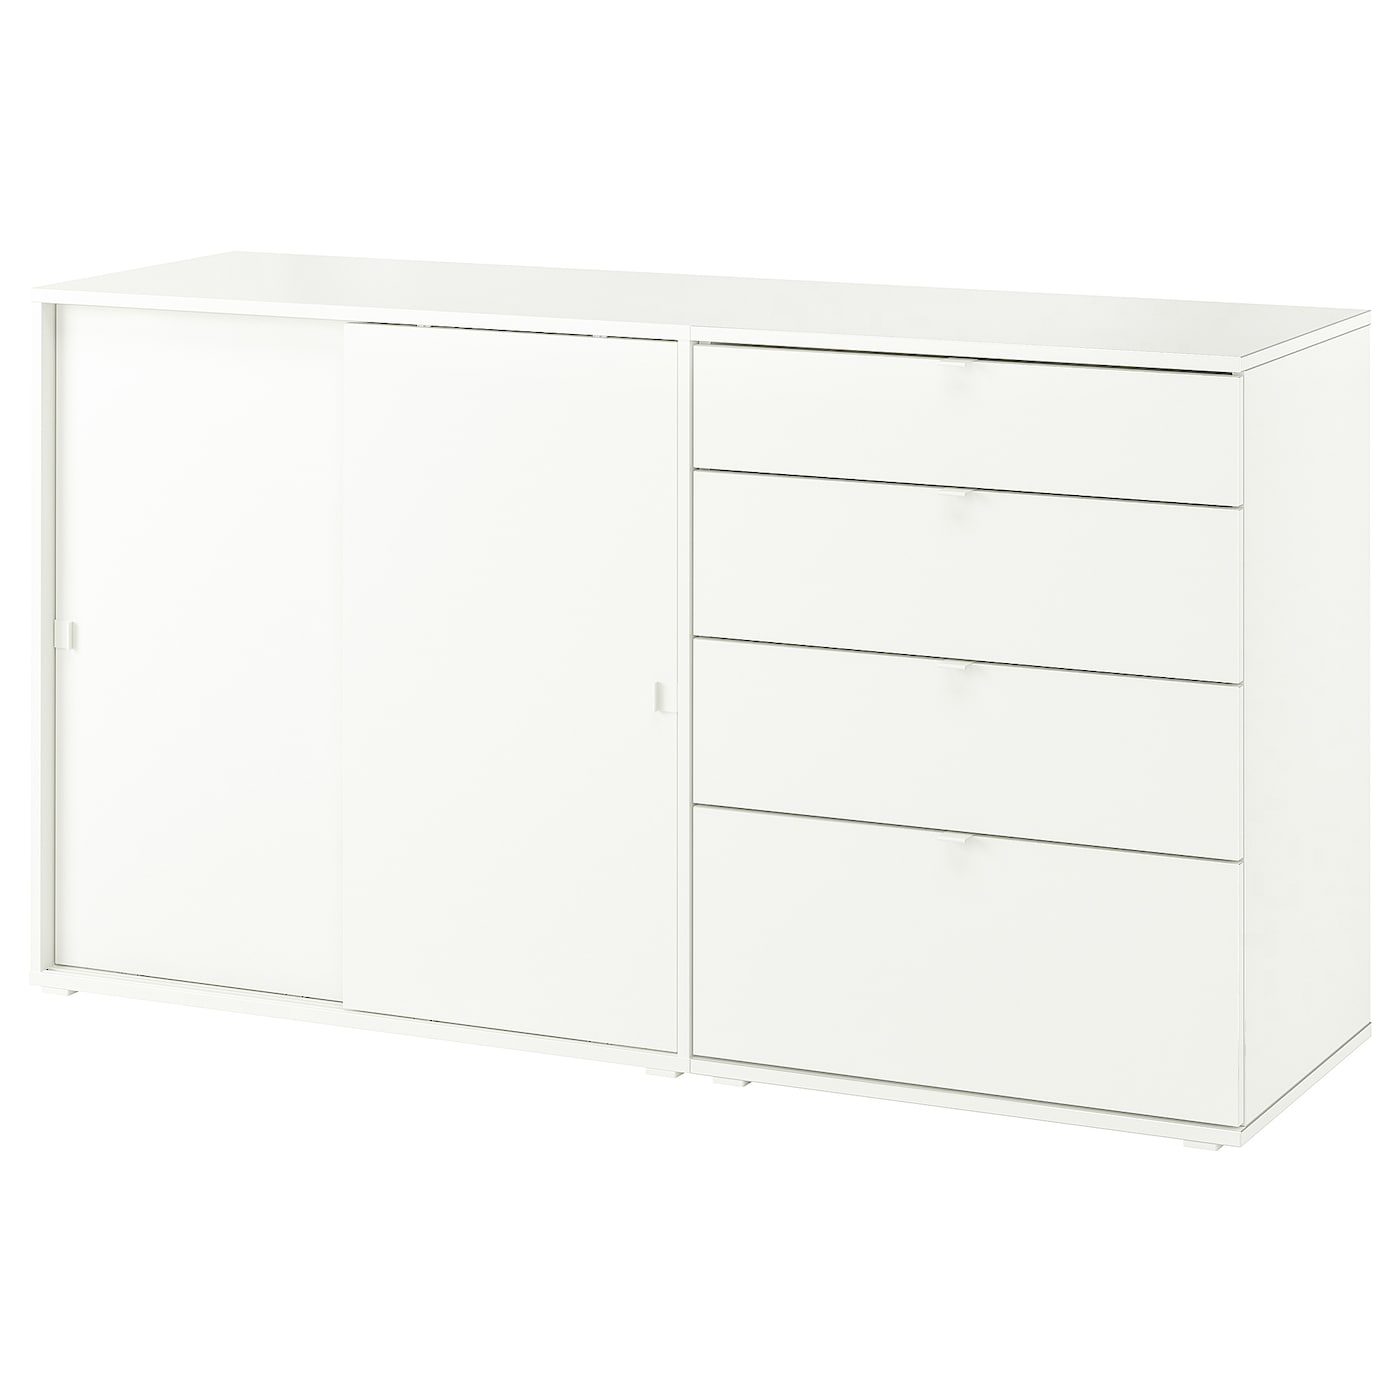 Книжный шкаф - VIHALS IKEA/ ВИХАЛС ИКЕА,   165х90 см, белый